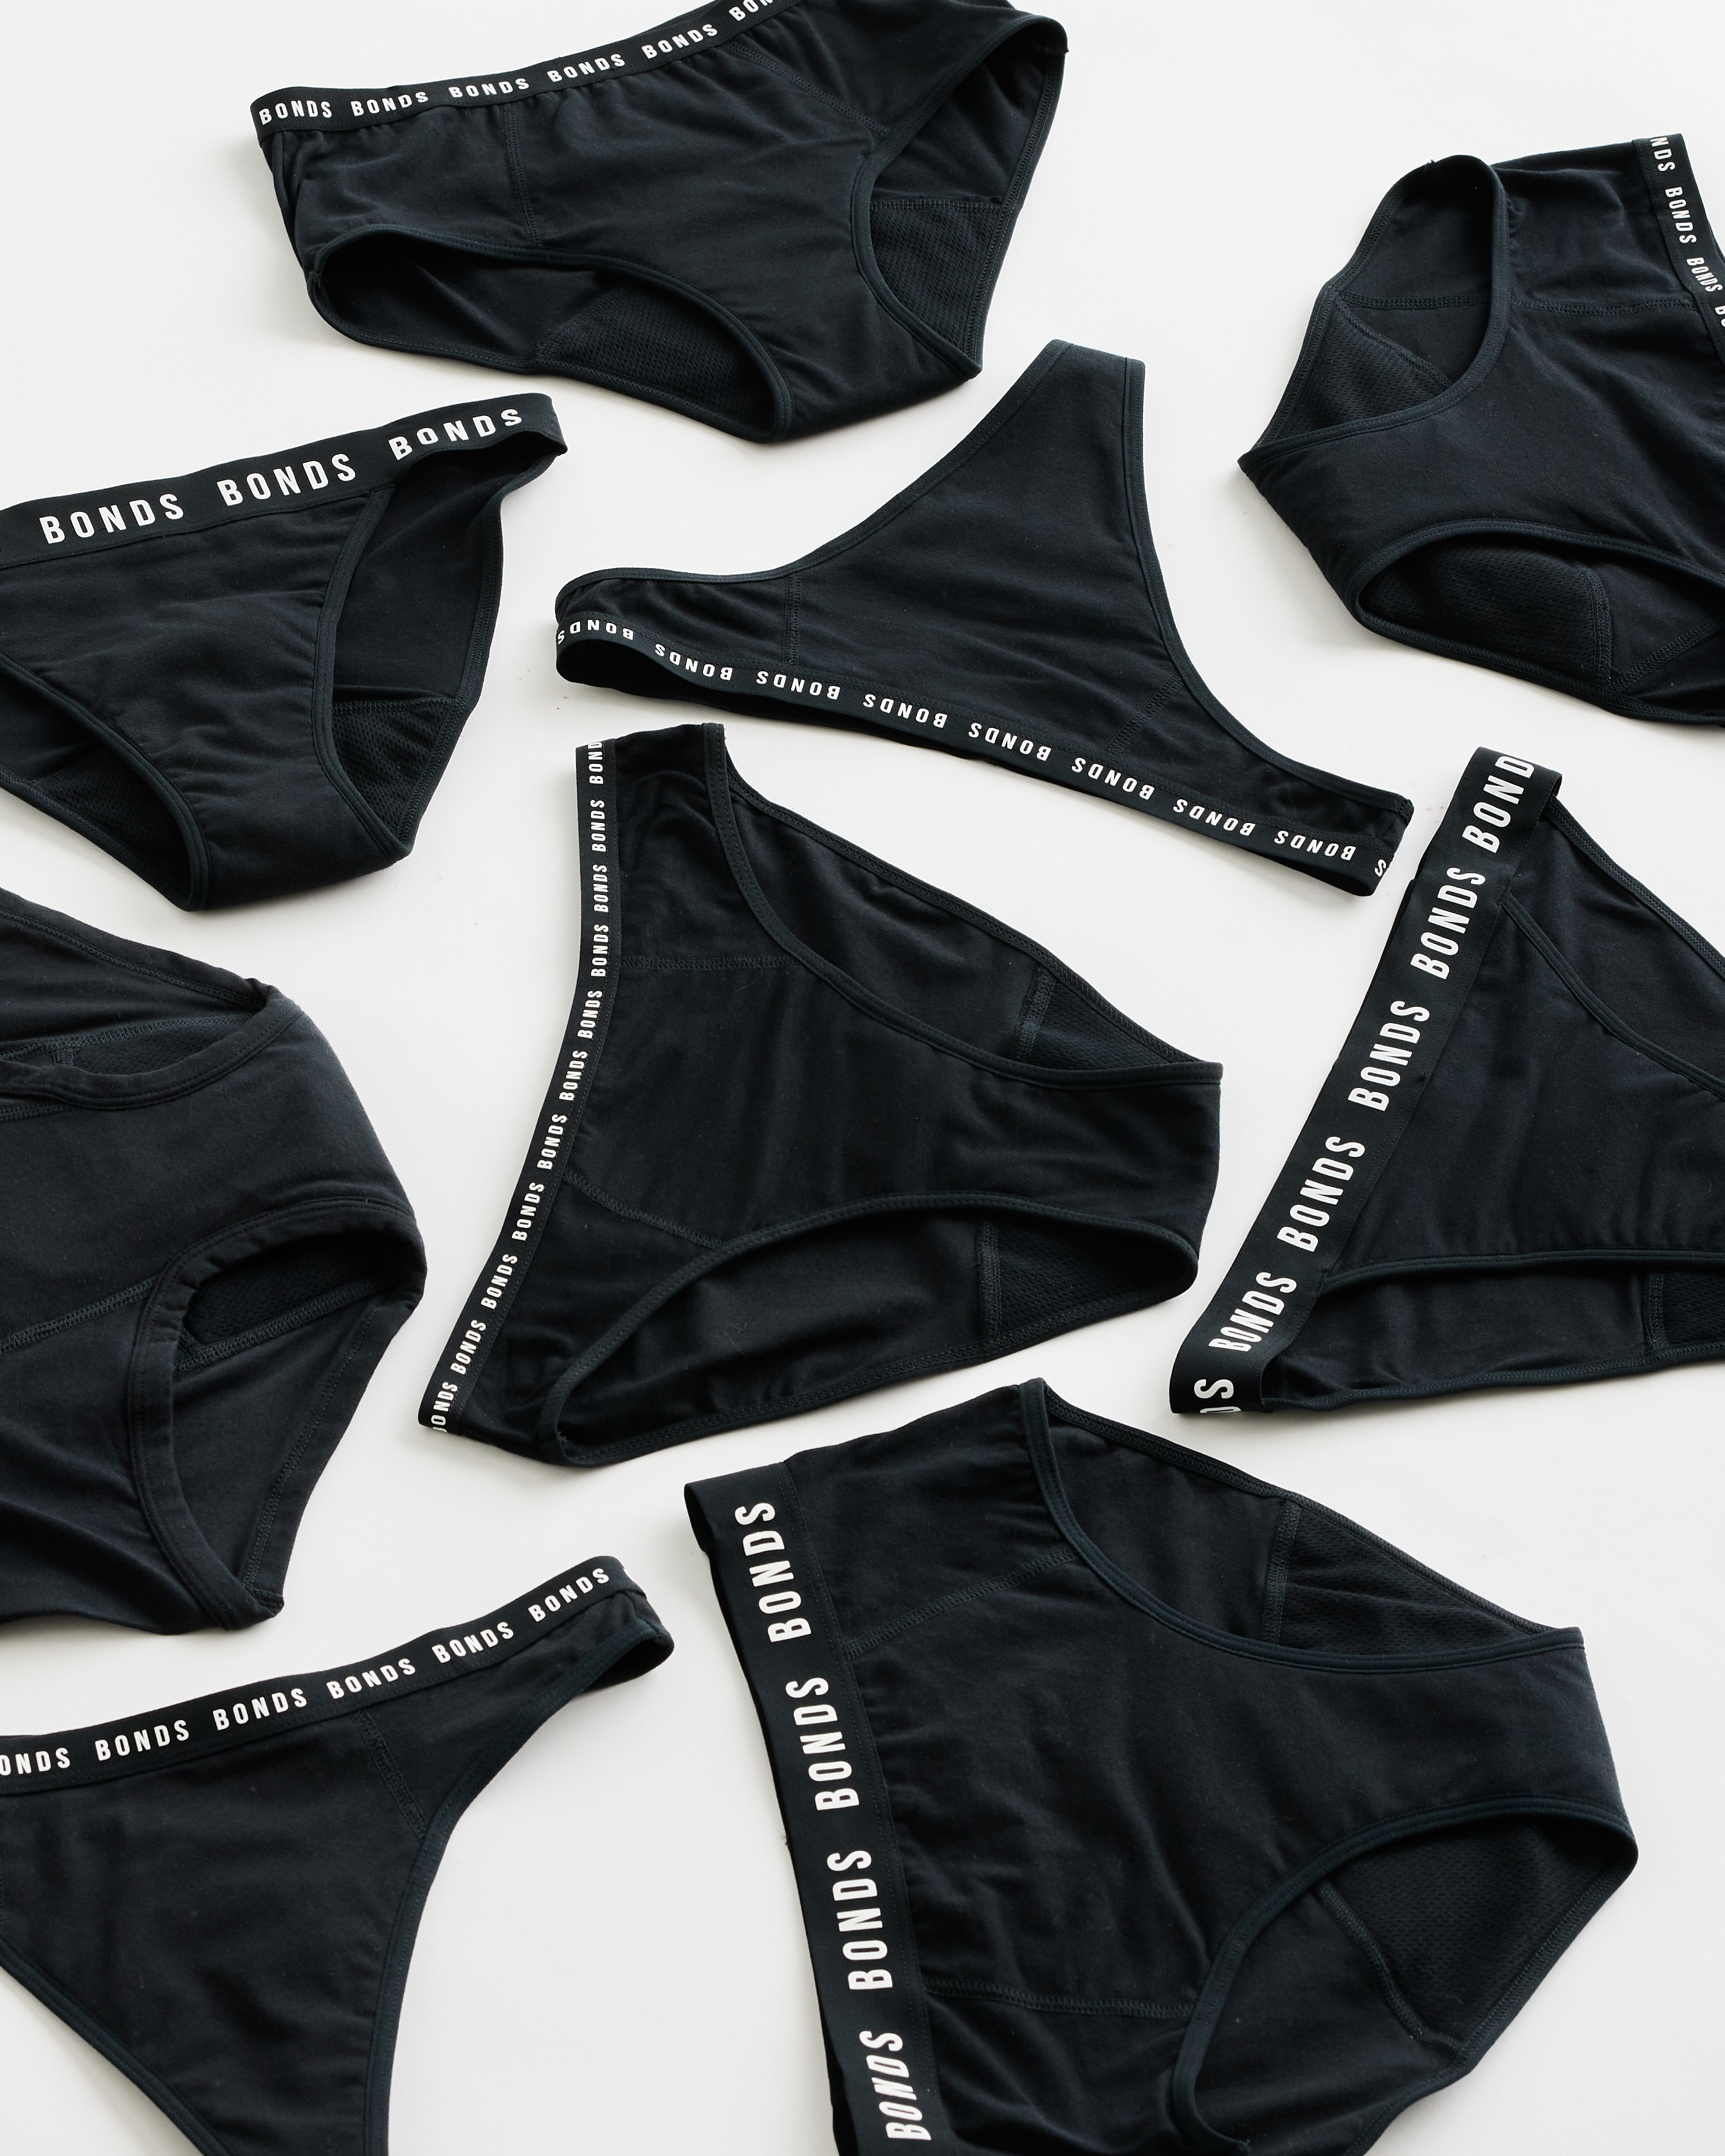 Women's Undies - Buy Comfy Bikini & More